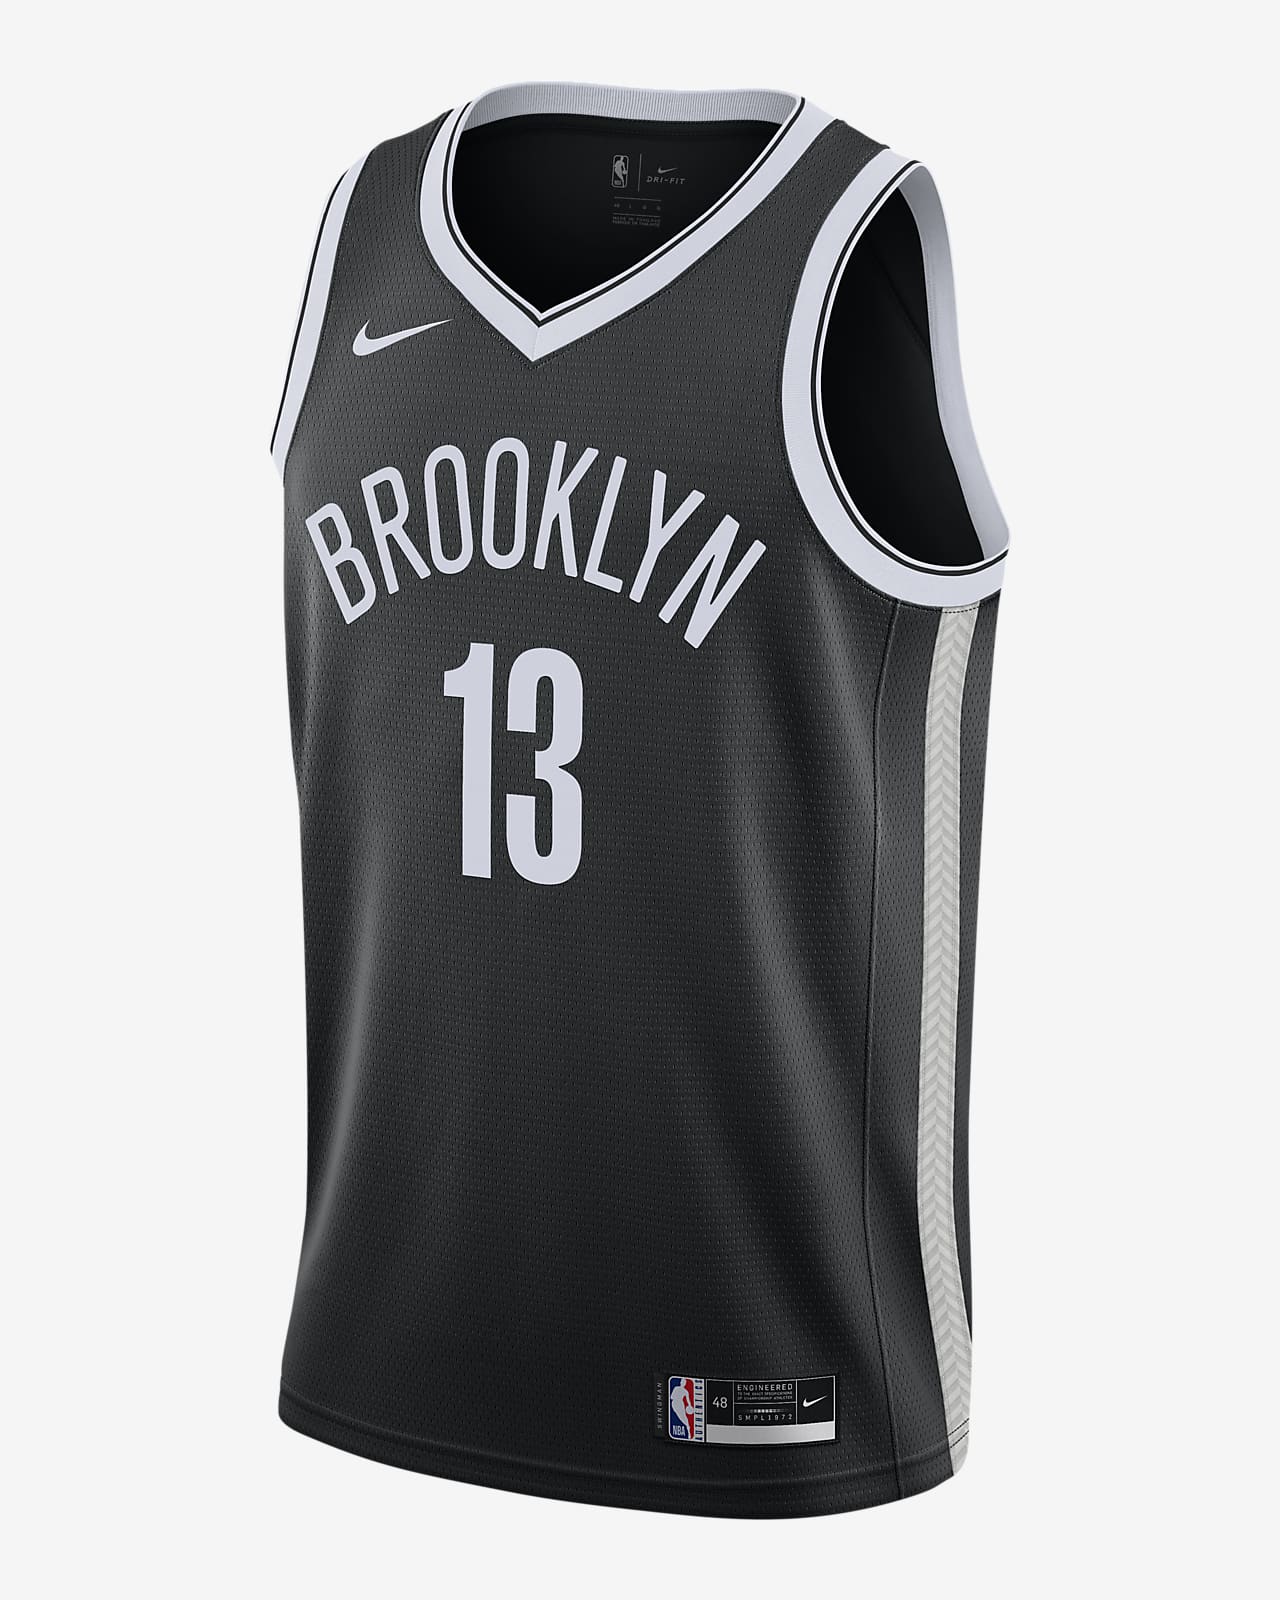 Camiseta NBA Nets Icon Edition 2020. Nike.com